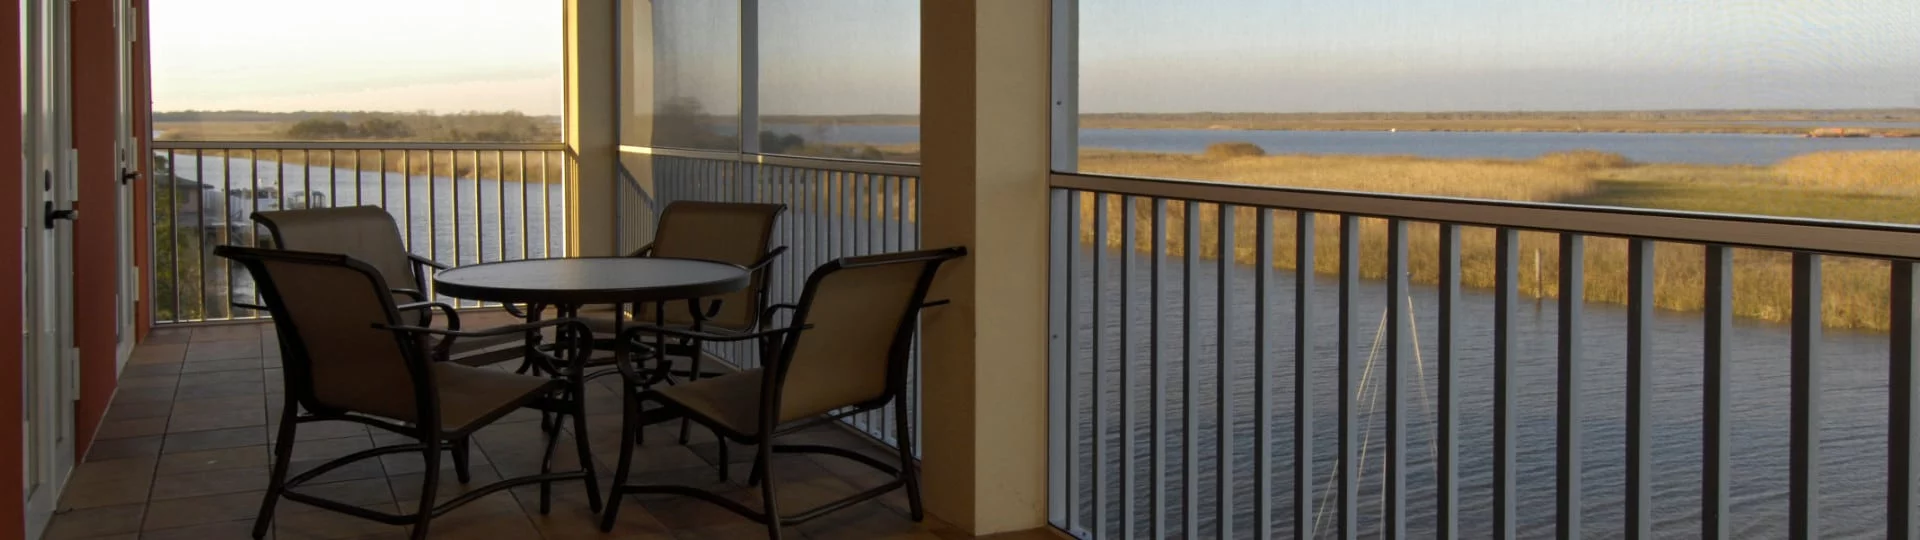 Hotels on Florida's Forgotten Coast